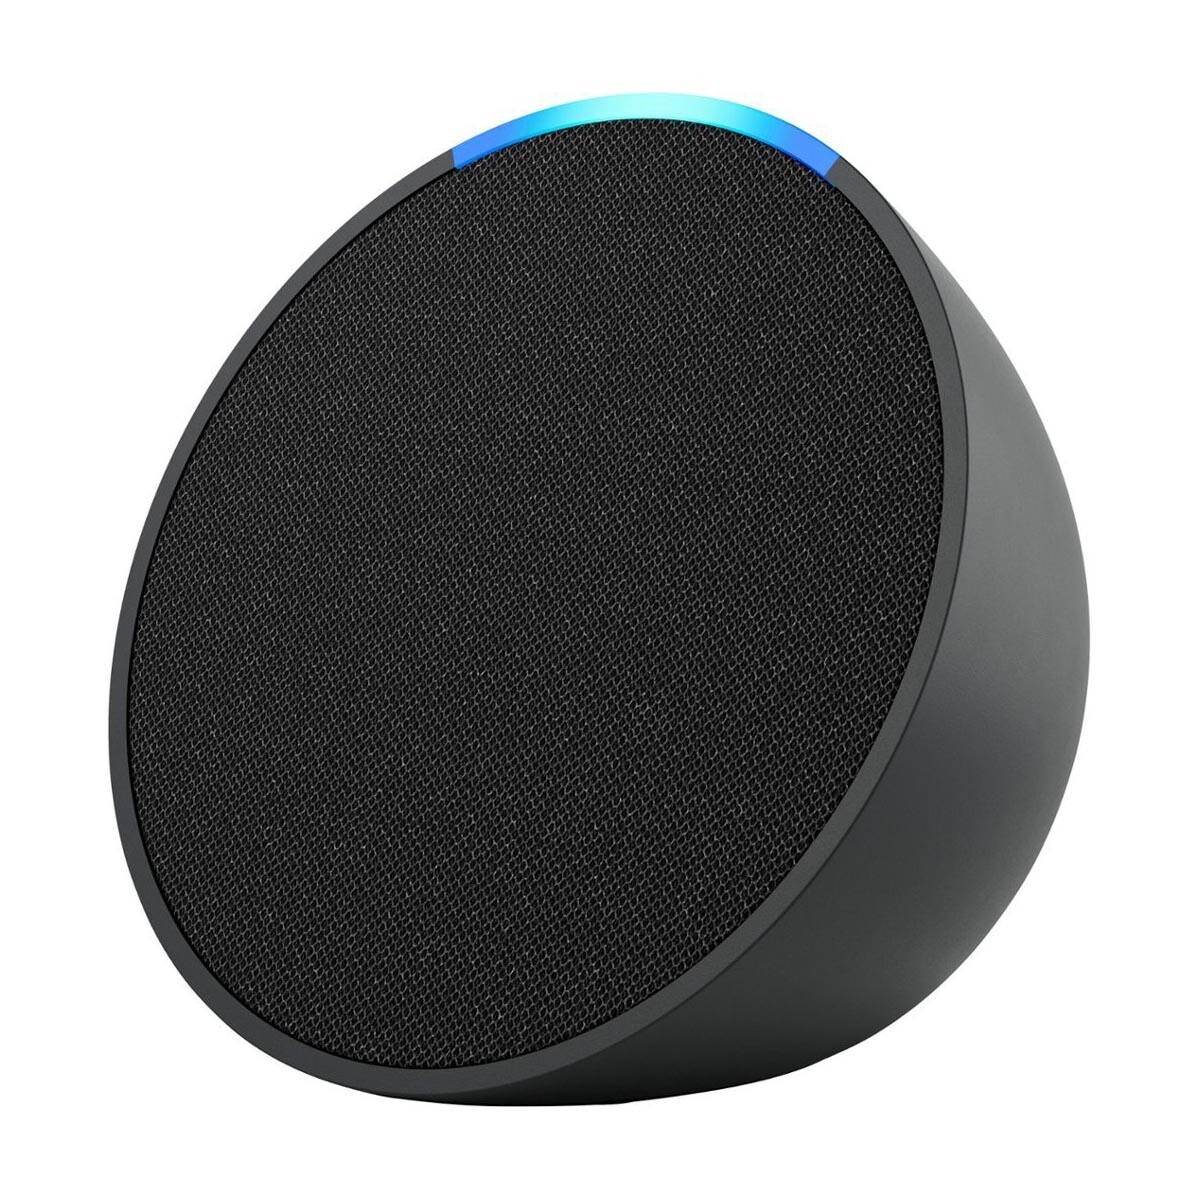 Parlante Smart Amazon Echo Pop (1st Gen) C/ Asistente Virtual Alexa - Charcoal 